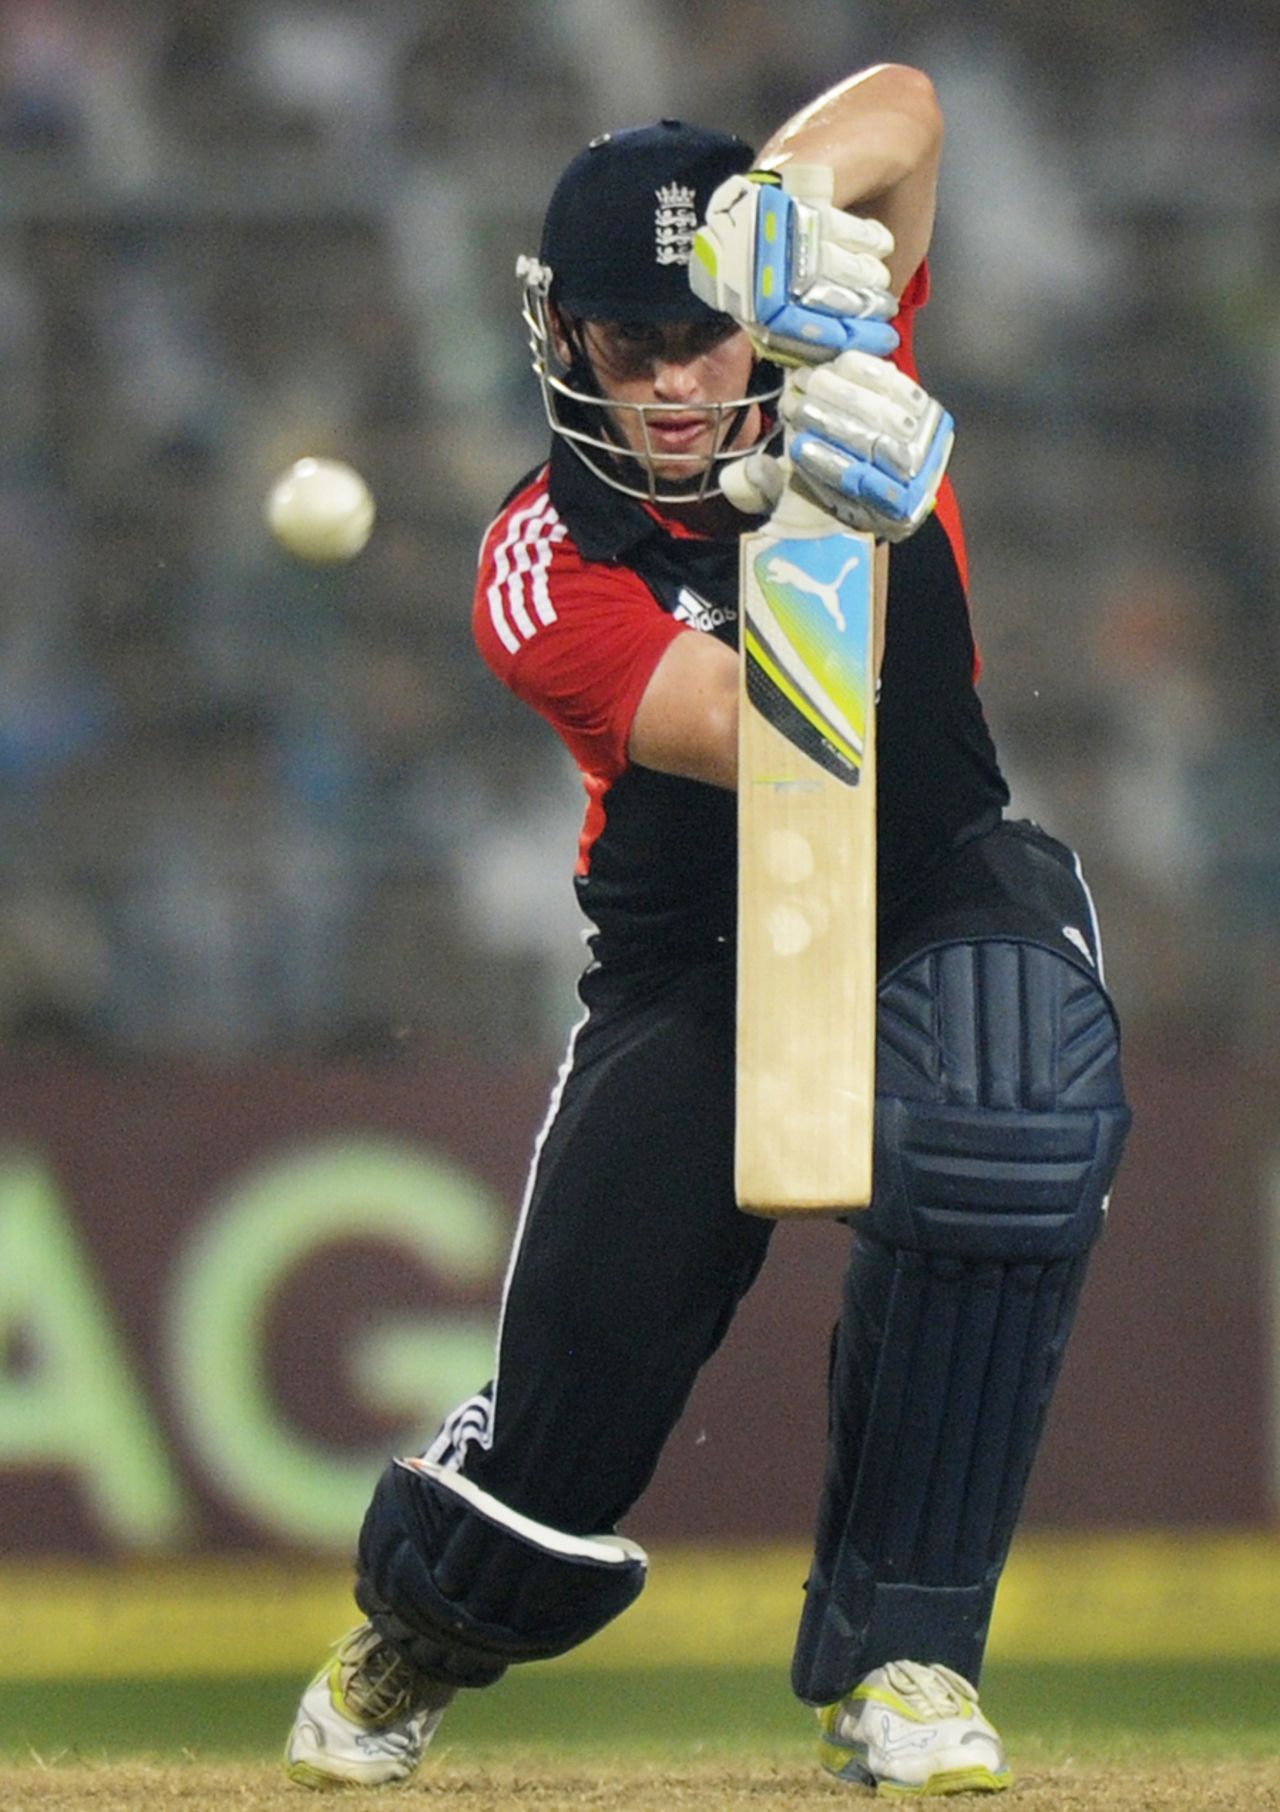 Craig Kieswetter showed good composure during his half-century, India v England, 5th ODI, Eden Gardens, October 25 2011